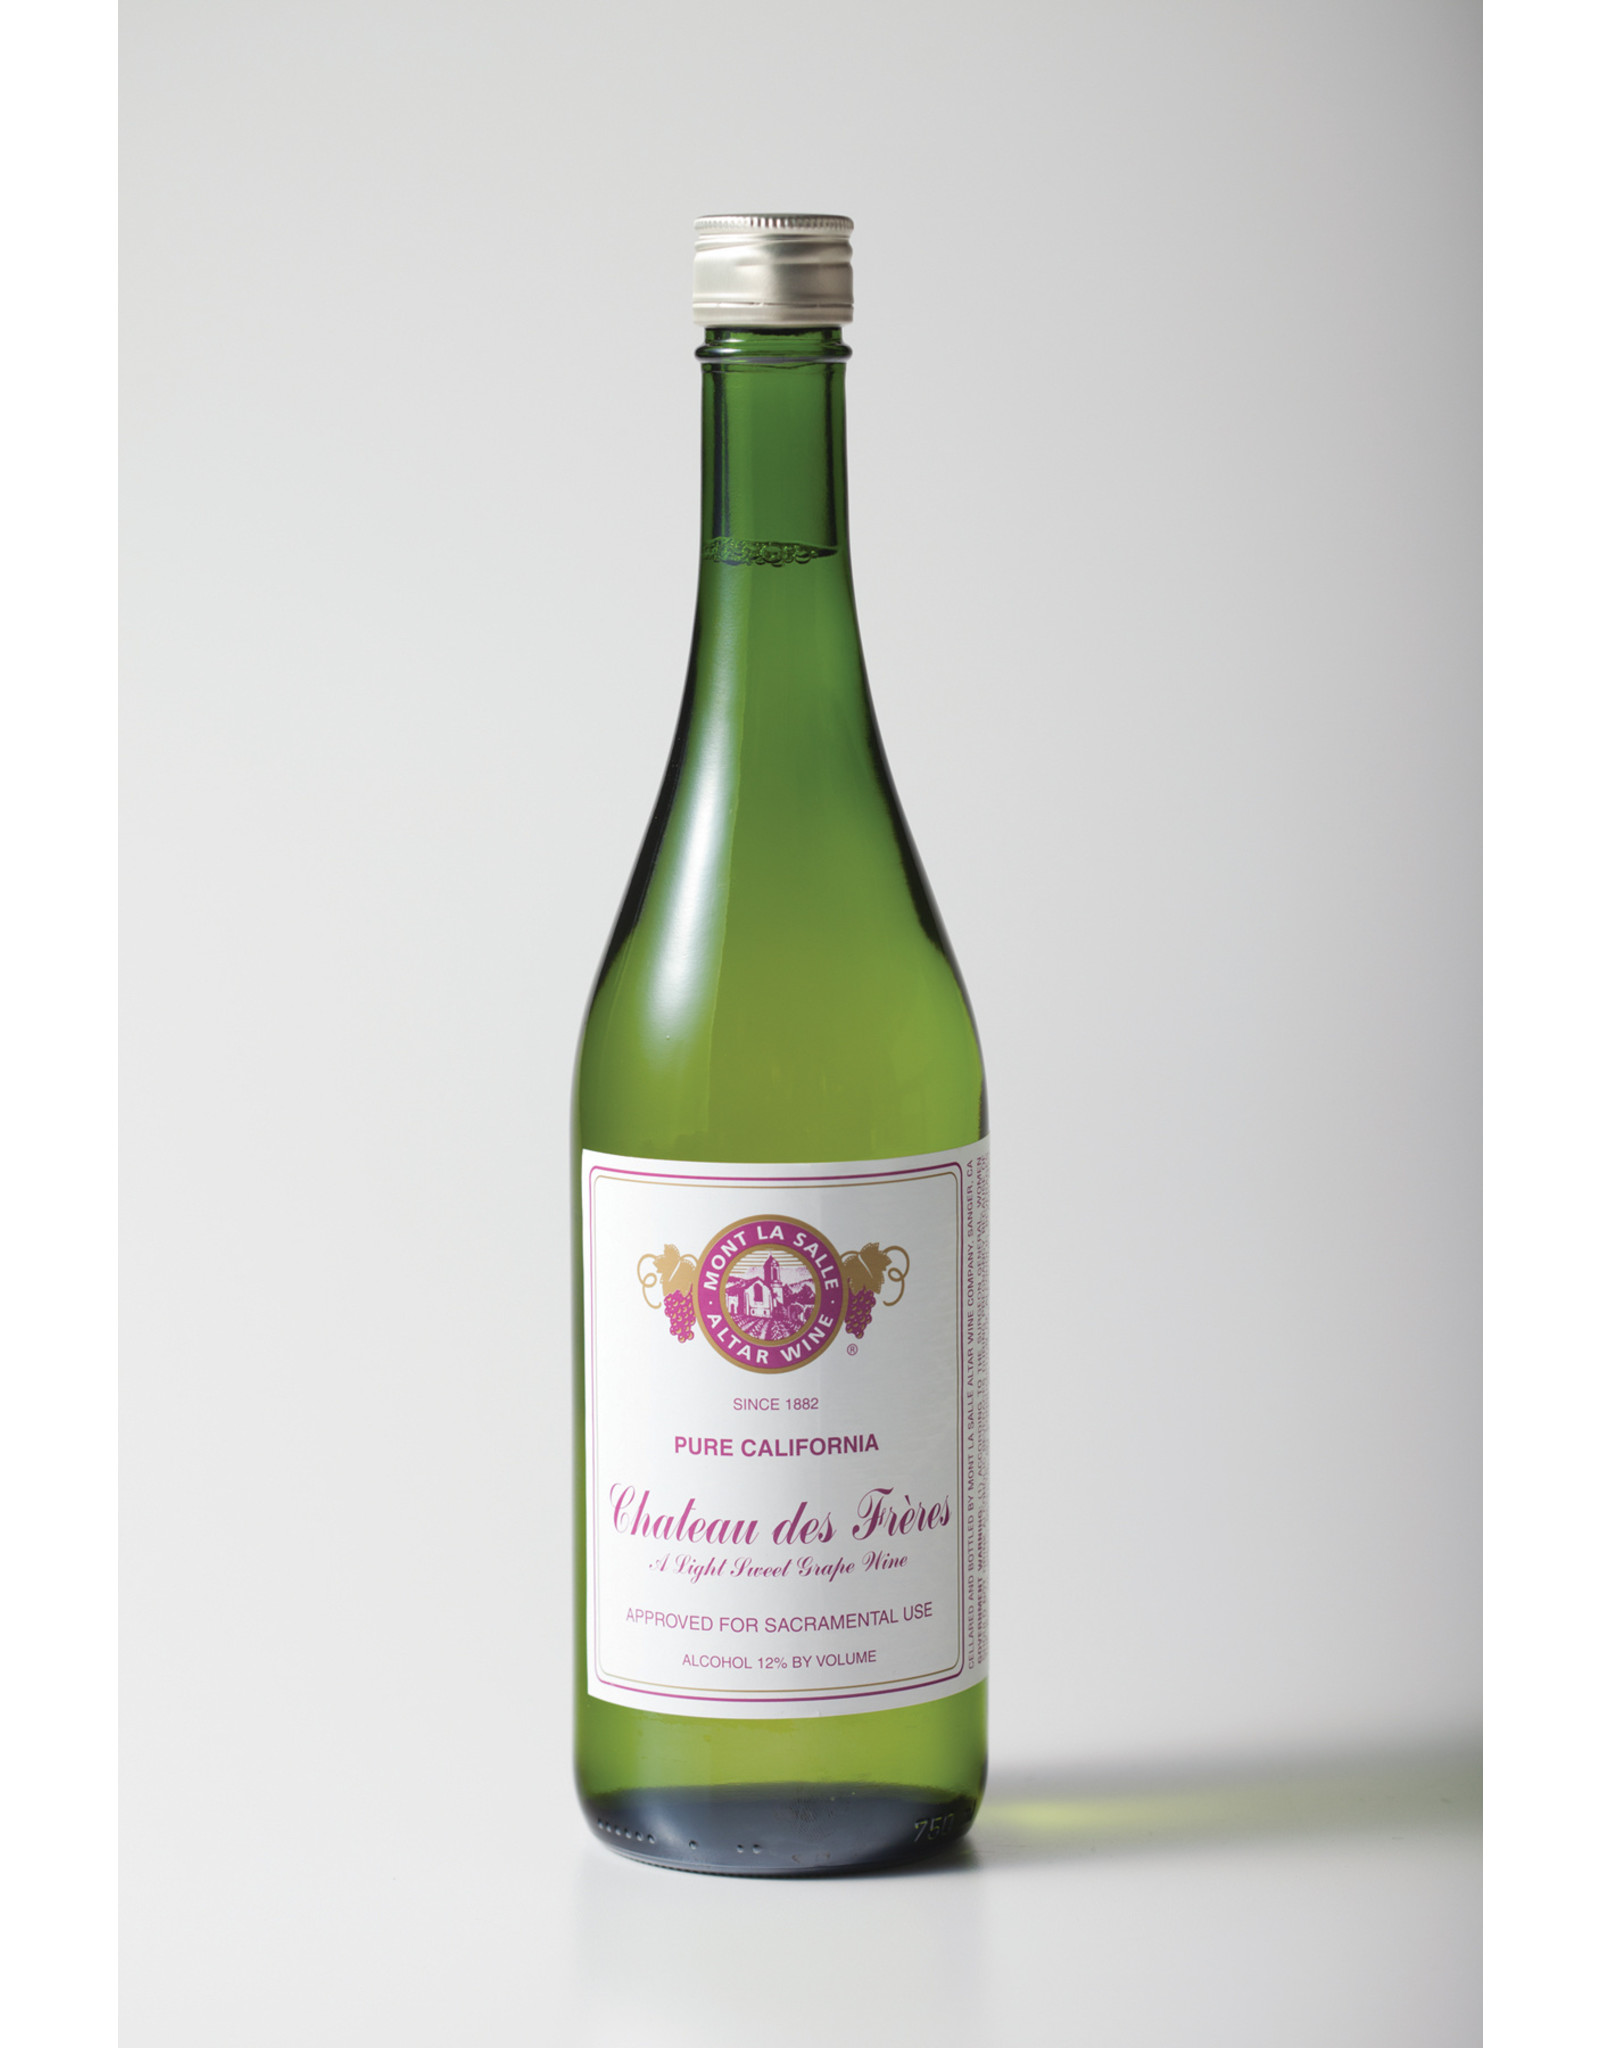 Napa Valley (Mont La Salle) $101.90 Chateau de Frere Bottles, CANNOT BE SOLD ONLINE, CALL TO ORDER Chateau de Frere (12 750-ml Bottles) Wine